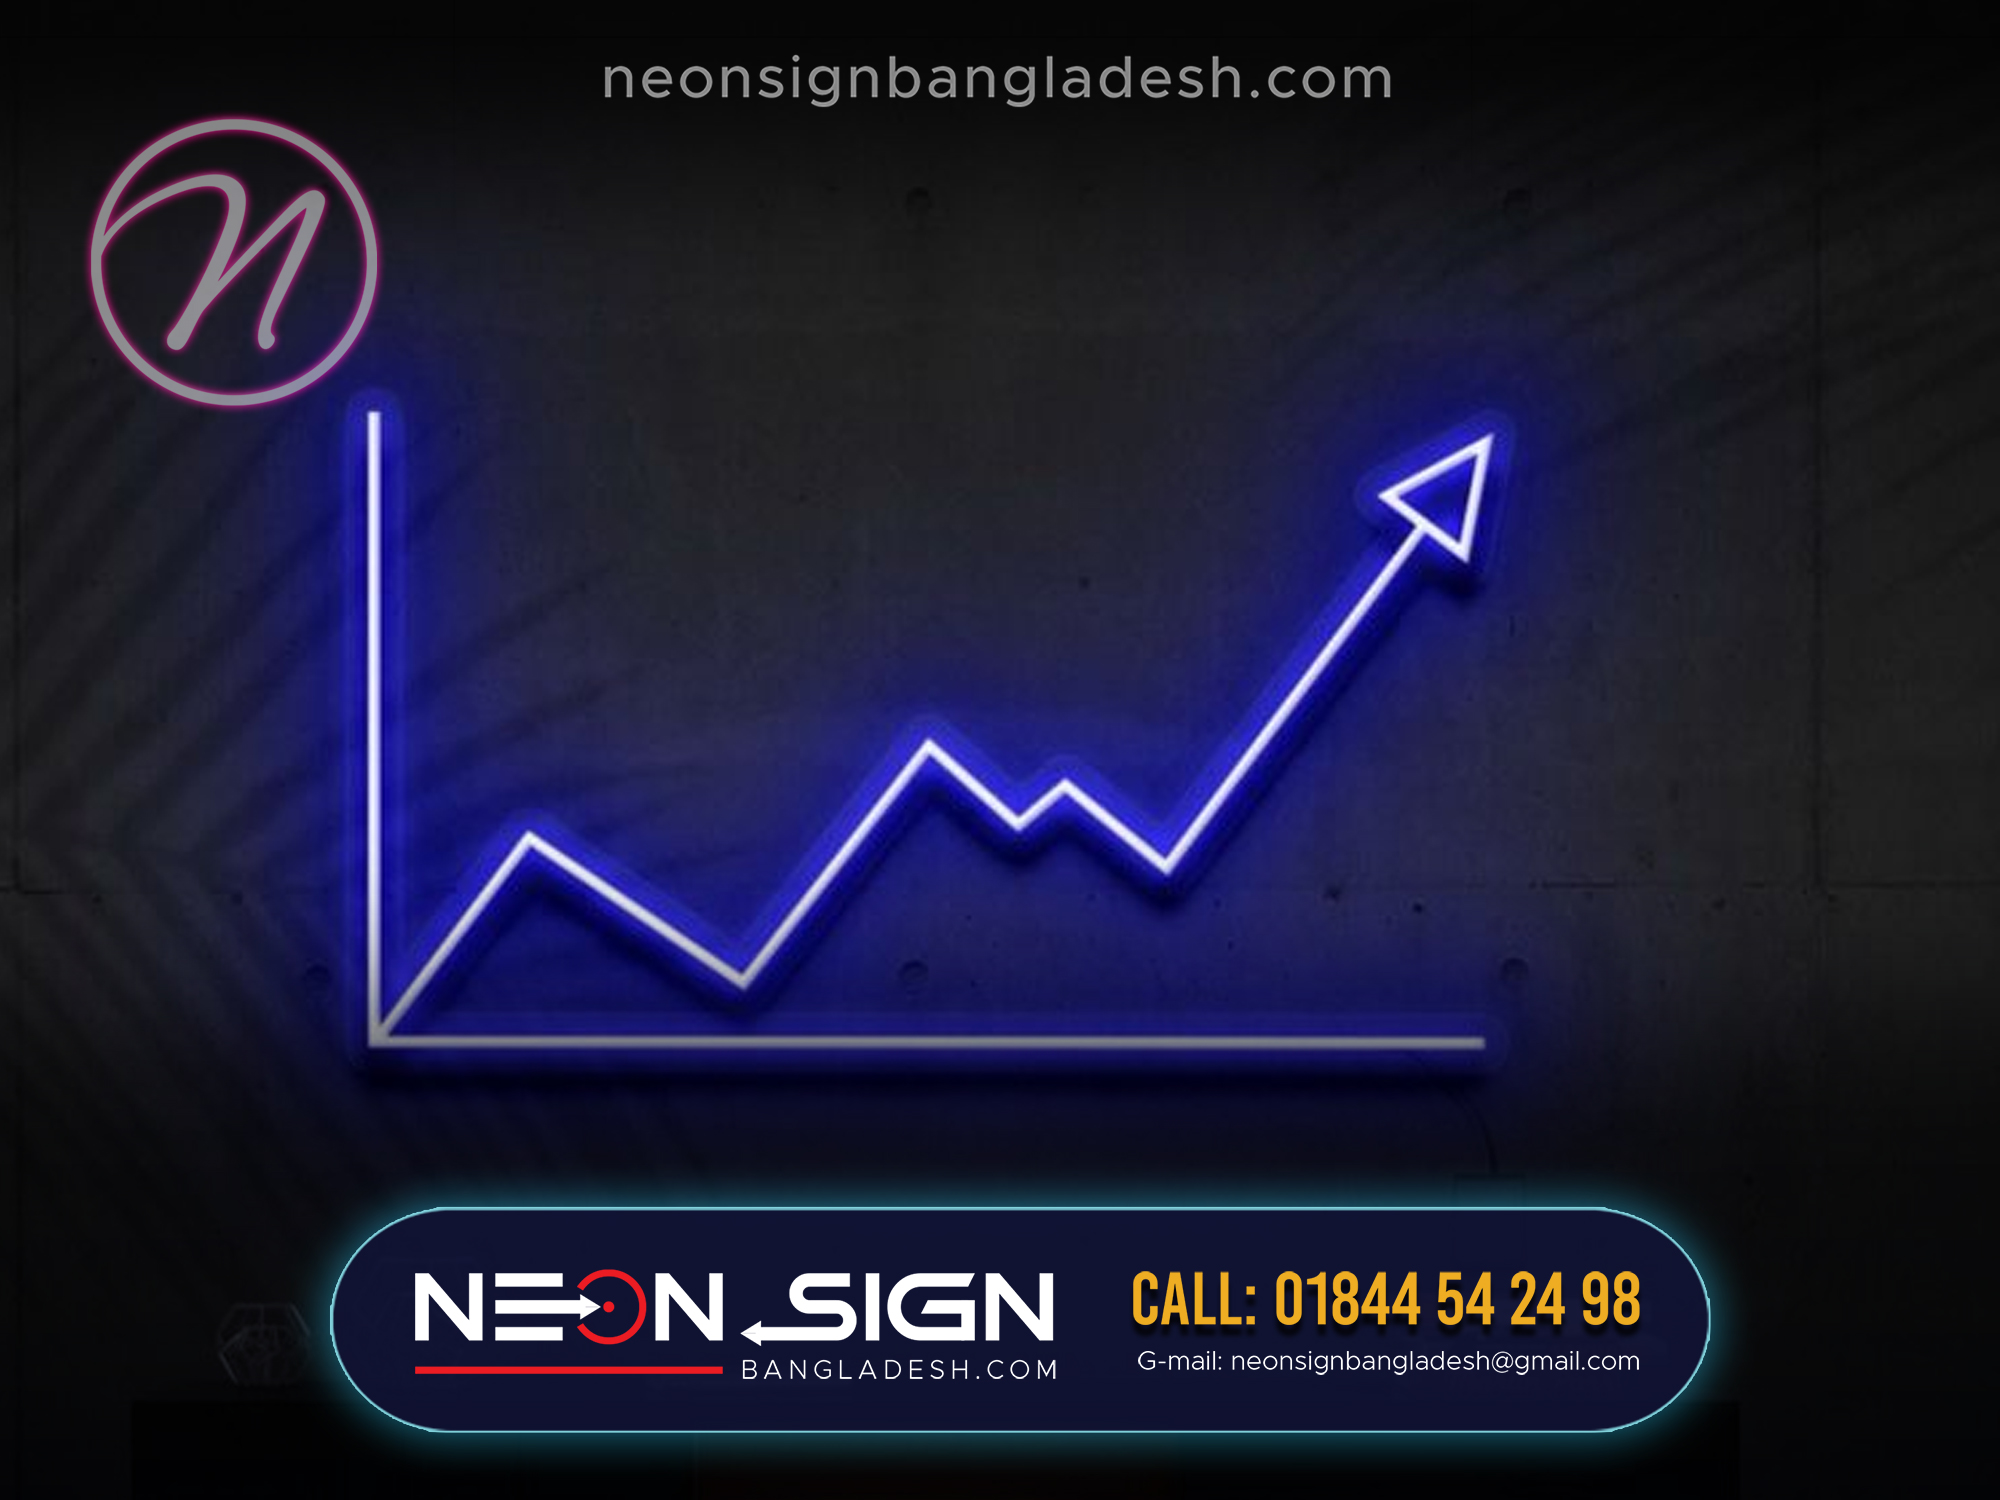 Neon Advertising Agency in Dhaka Bangladesh, neon sign price in bd. NamePlate Design in Bangladesh is the Best name plate designer company in Dhaka Bangladesh.